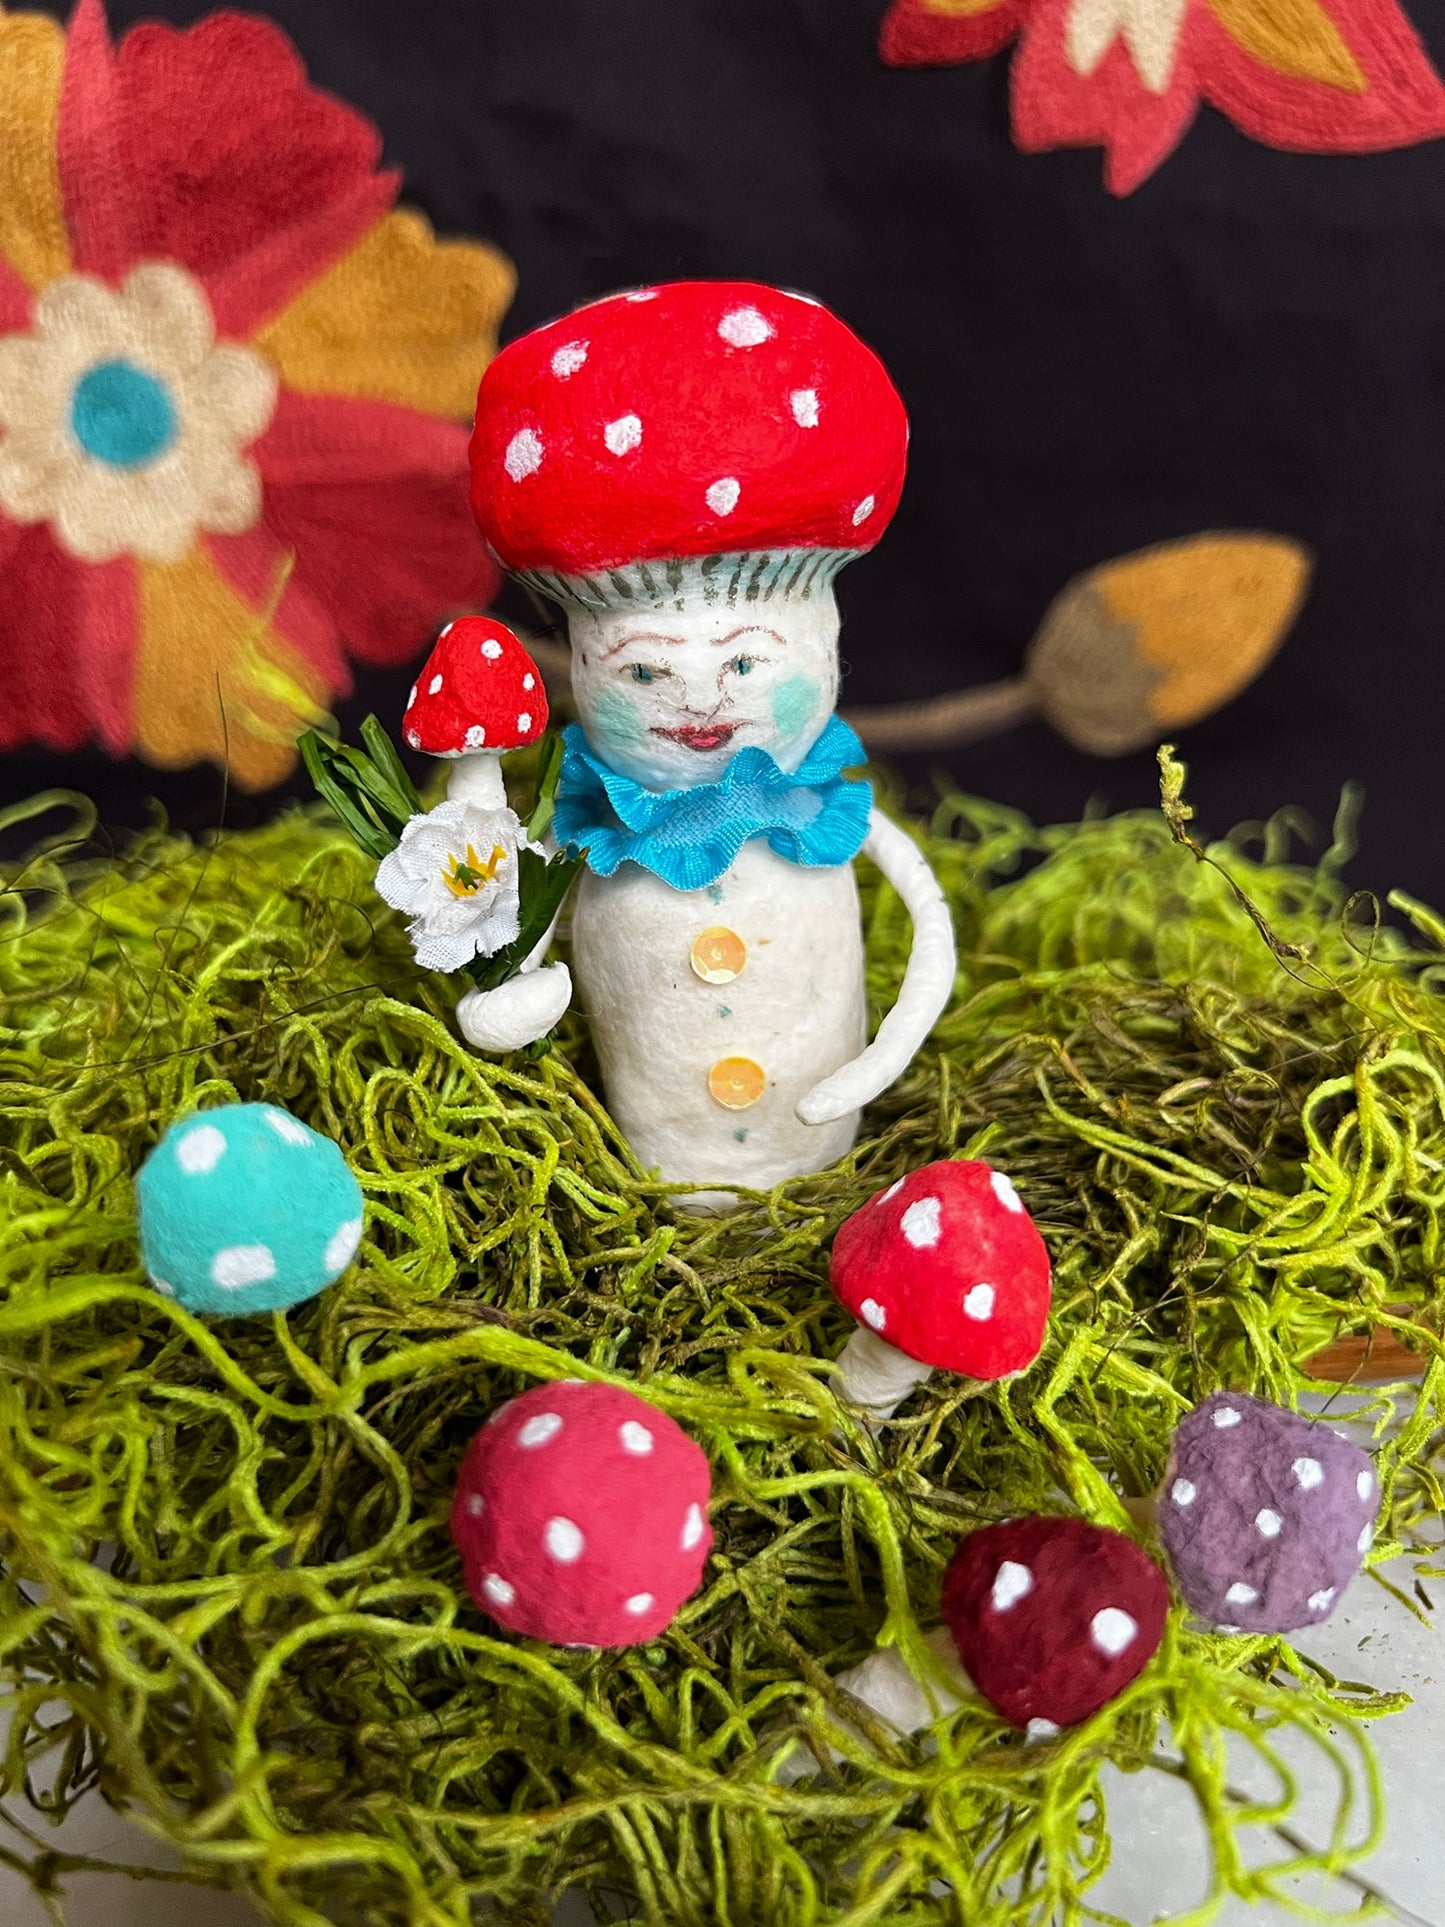 Handmade Spun Cotton Mushroom Ornament